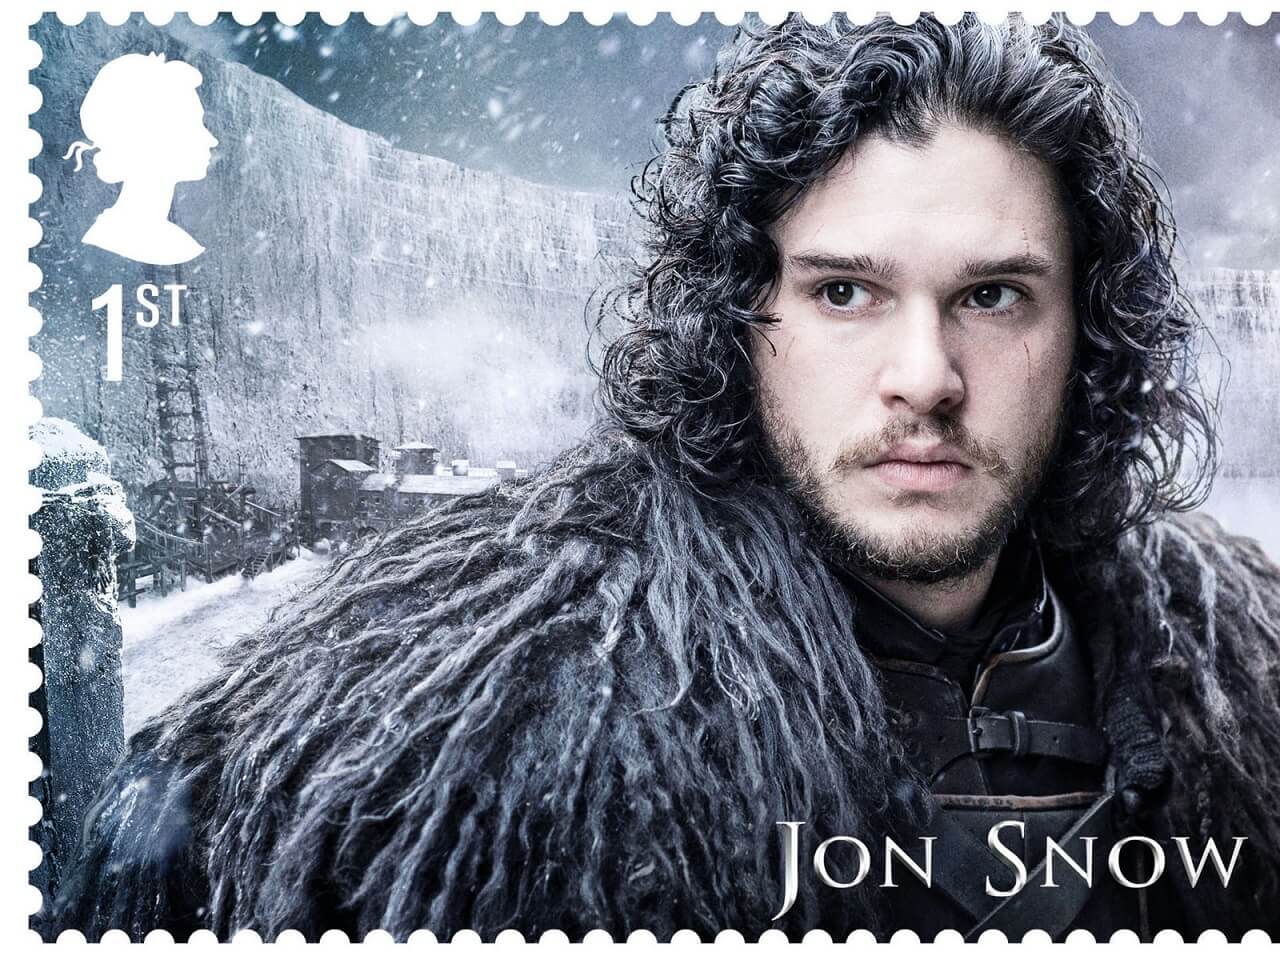 Il Trono di Spade: Jon Snow, Arya Stark e tanti altri nei francobolli UK